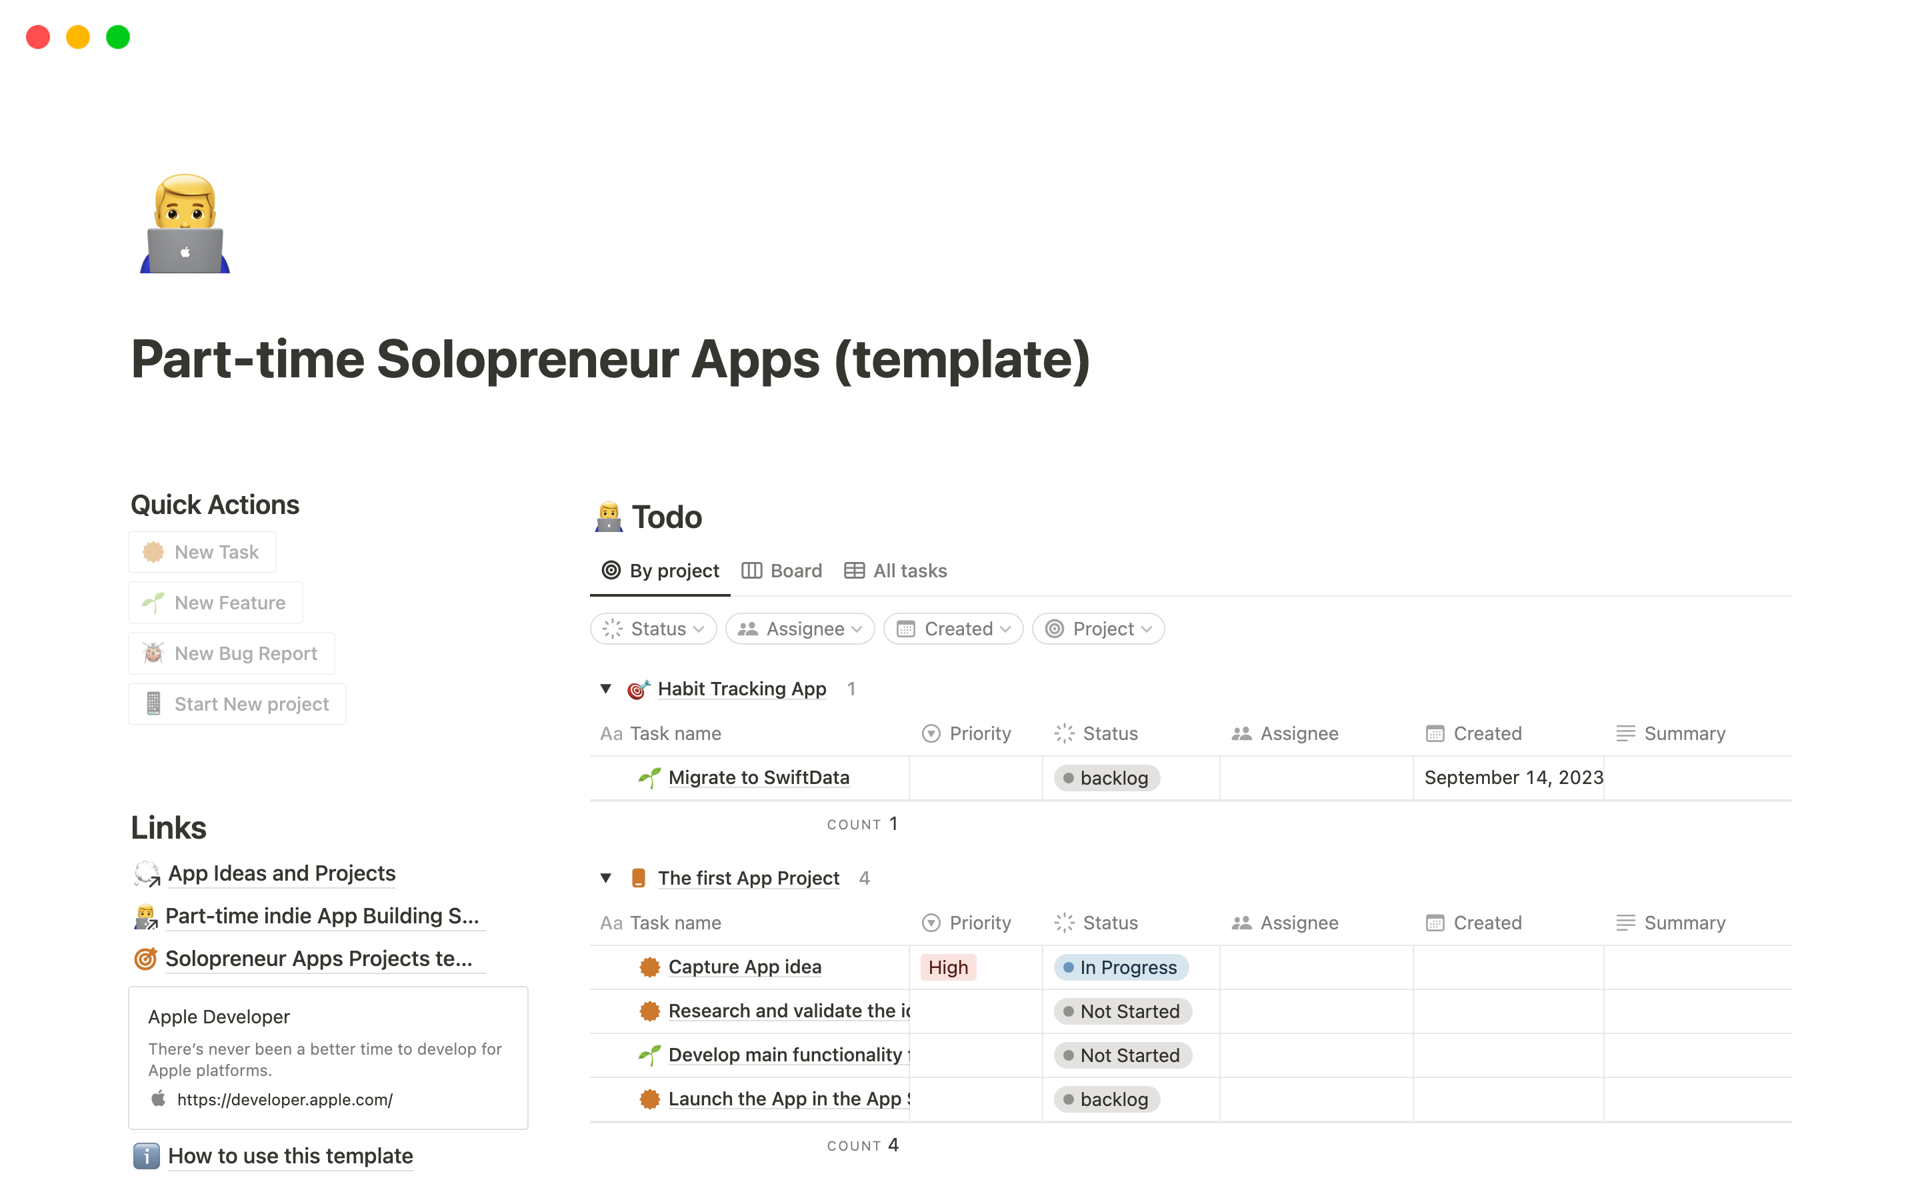 Vista previa de una plantilla para Part-time Solopreneur Apps 